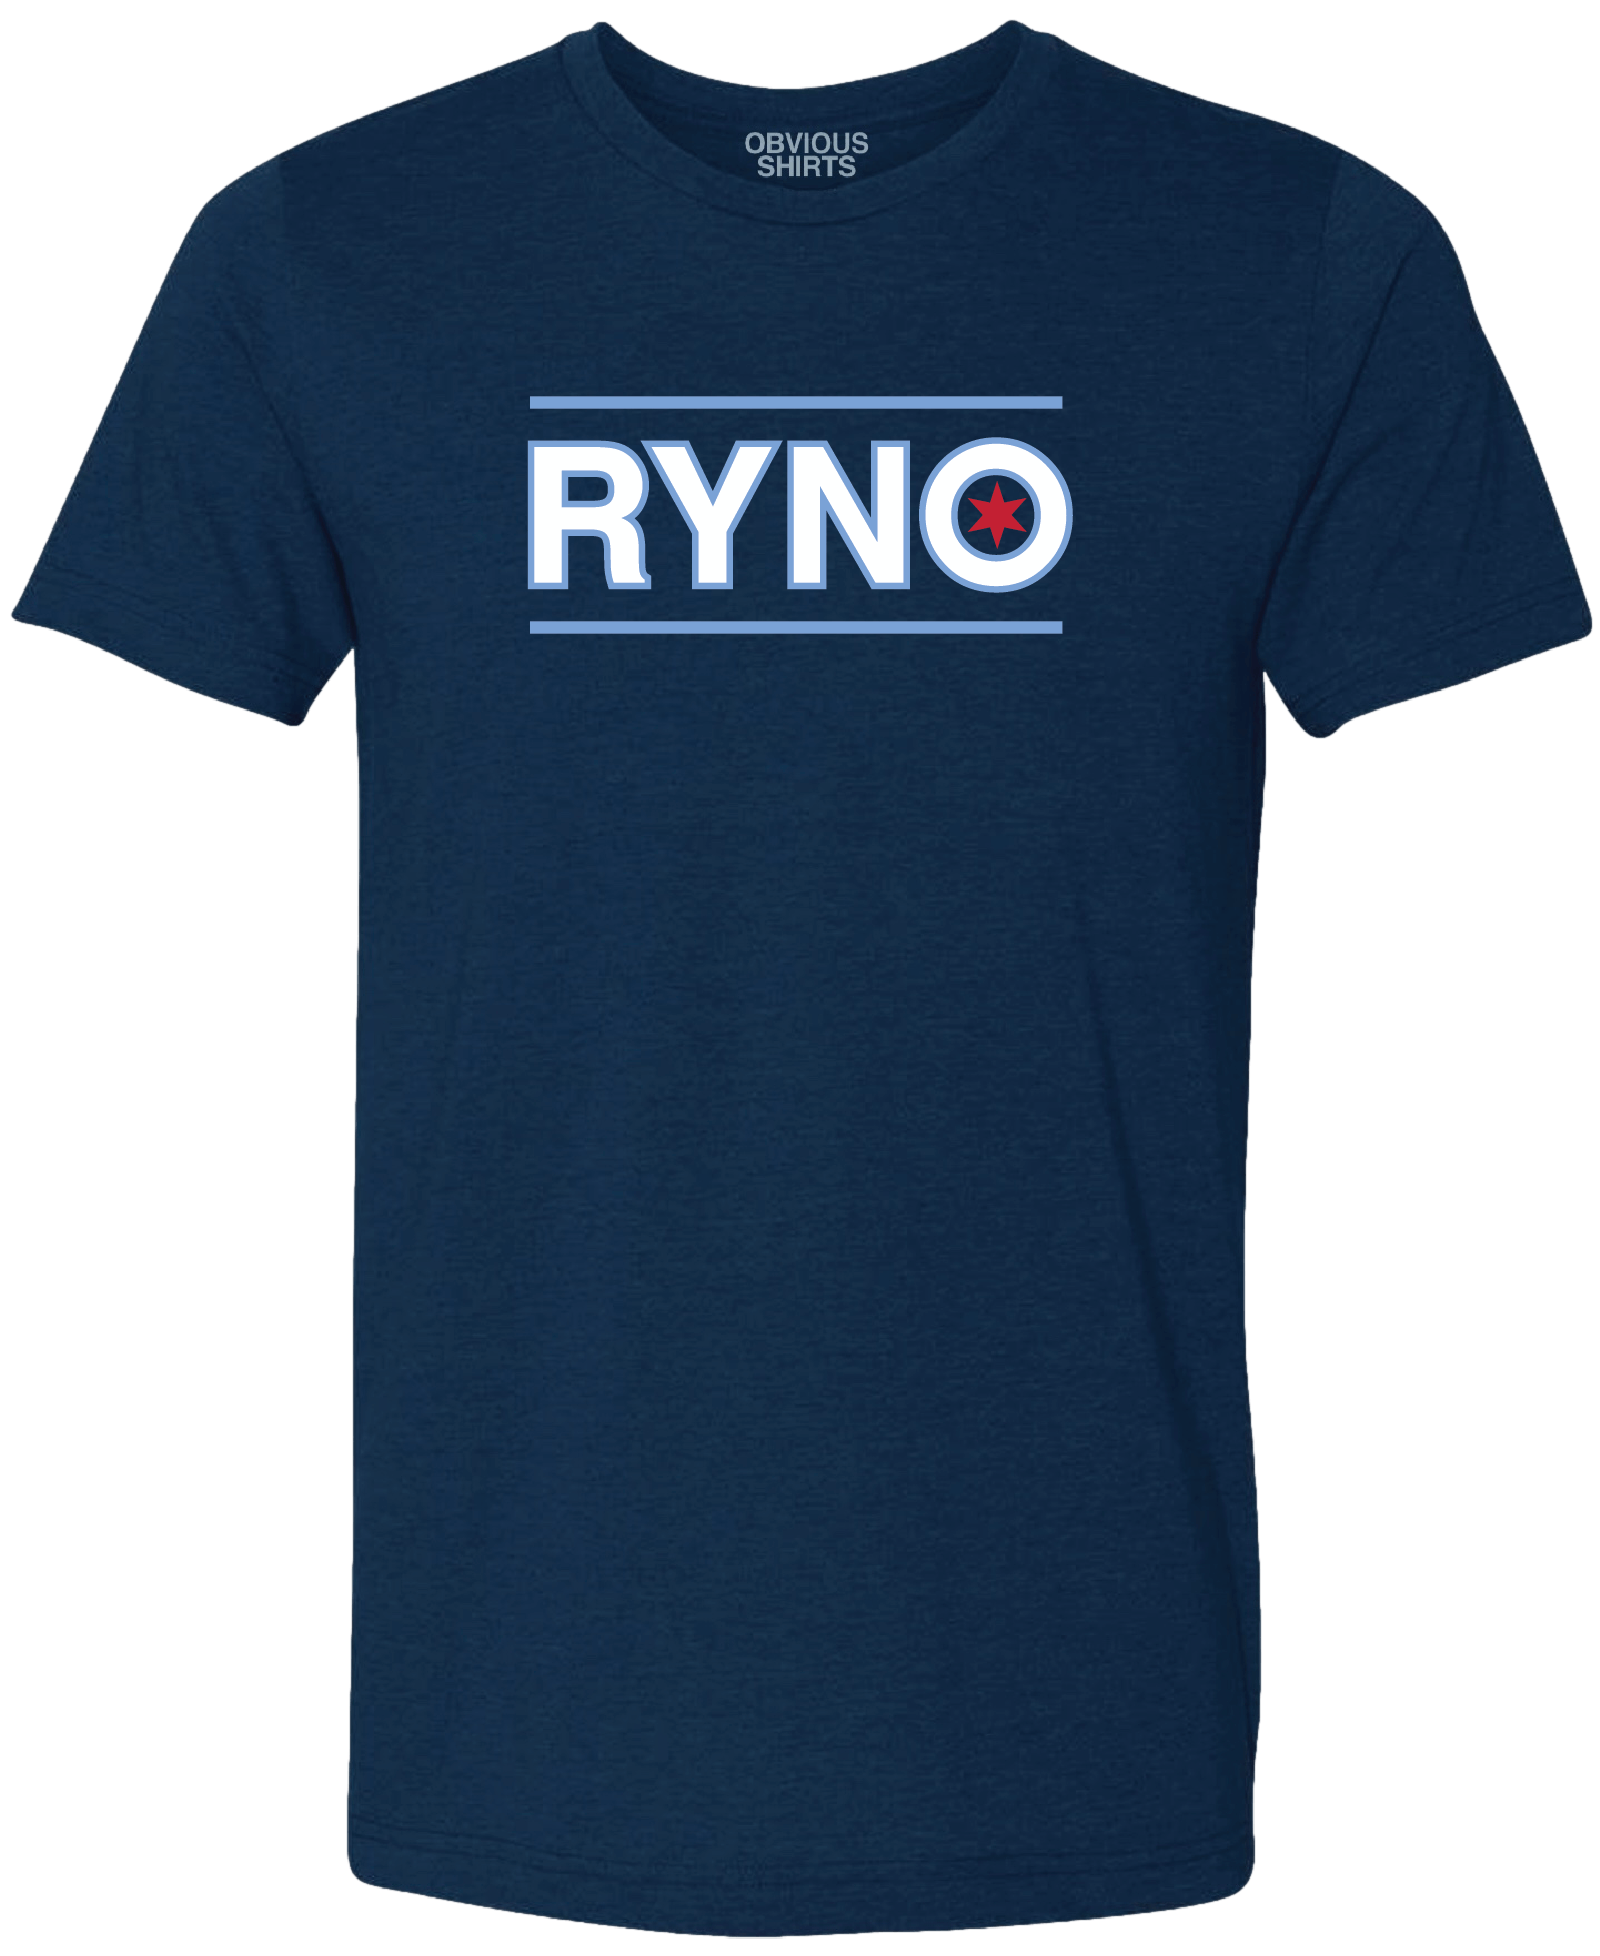 RYNO (WRIGLEYVILLE EDITION) | OBVIOUS SHIRTS.